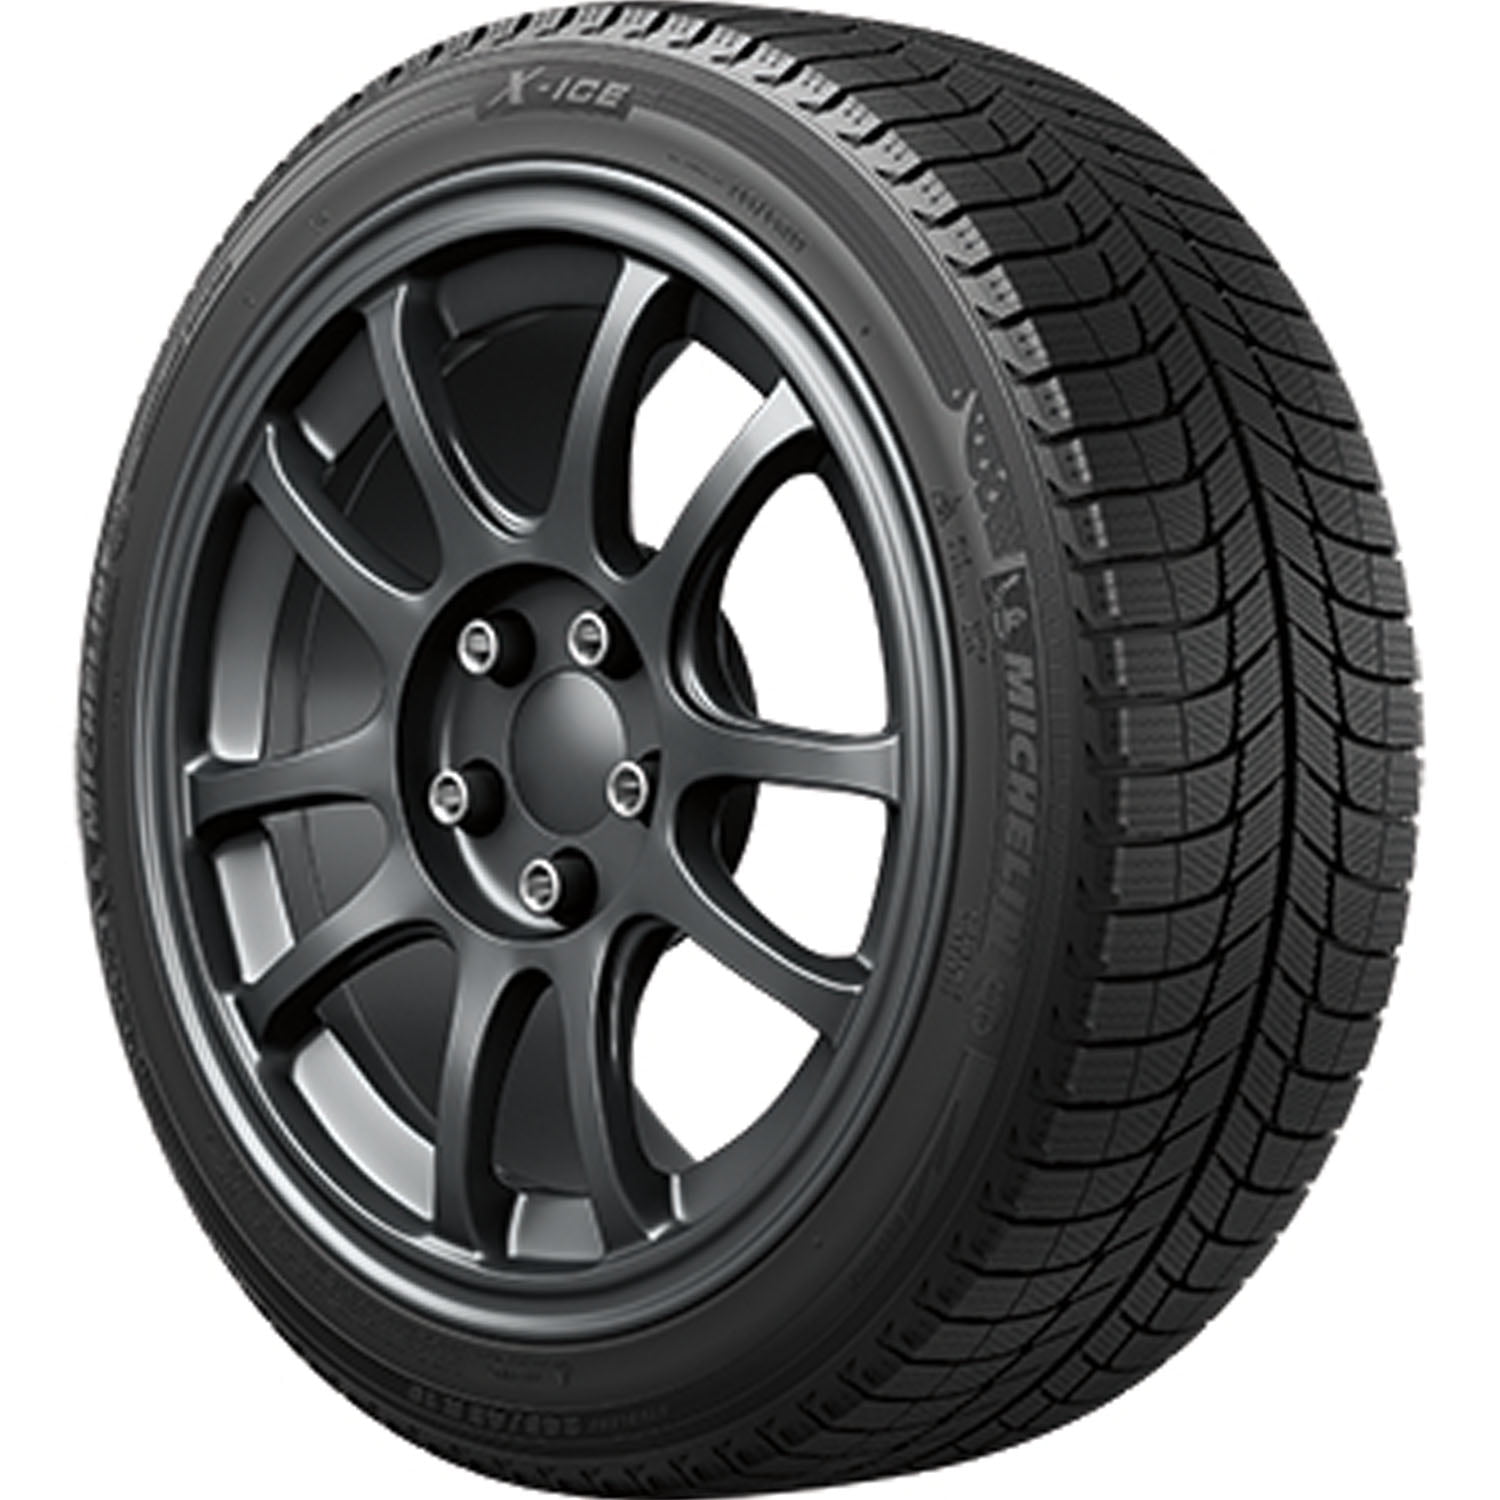 Michelin X-Ice Xi3 225/55R17 101 H Tire - Walmart.com